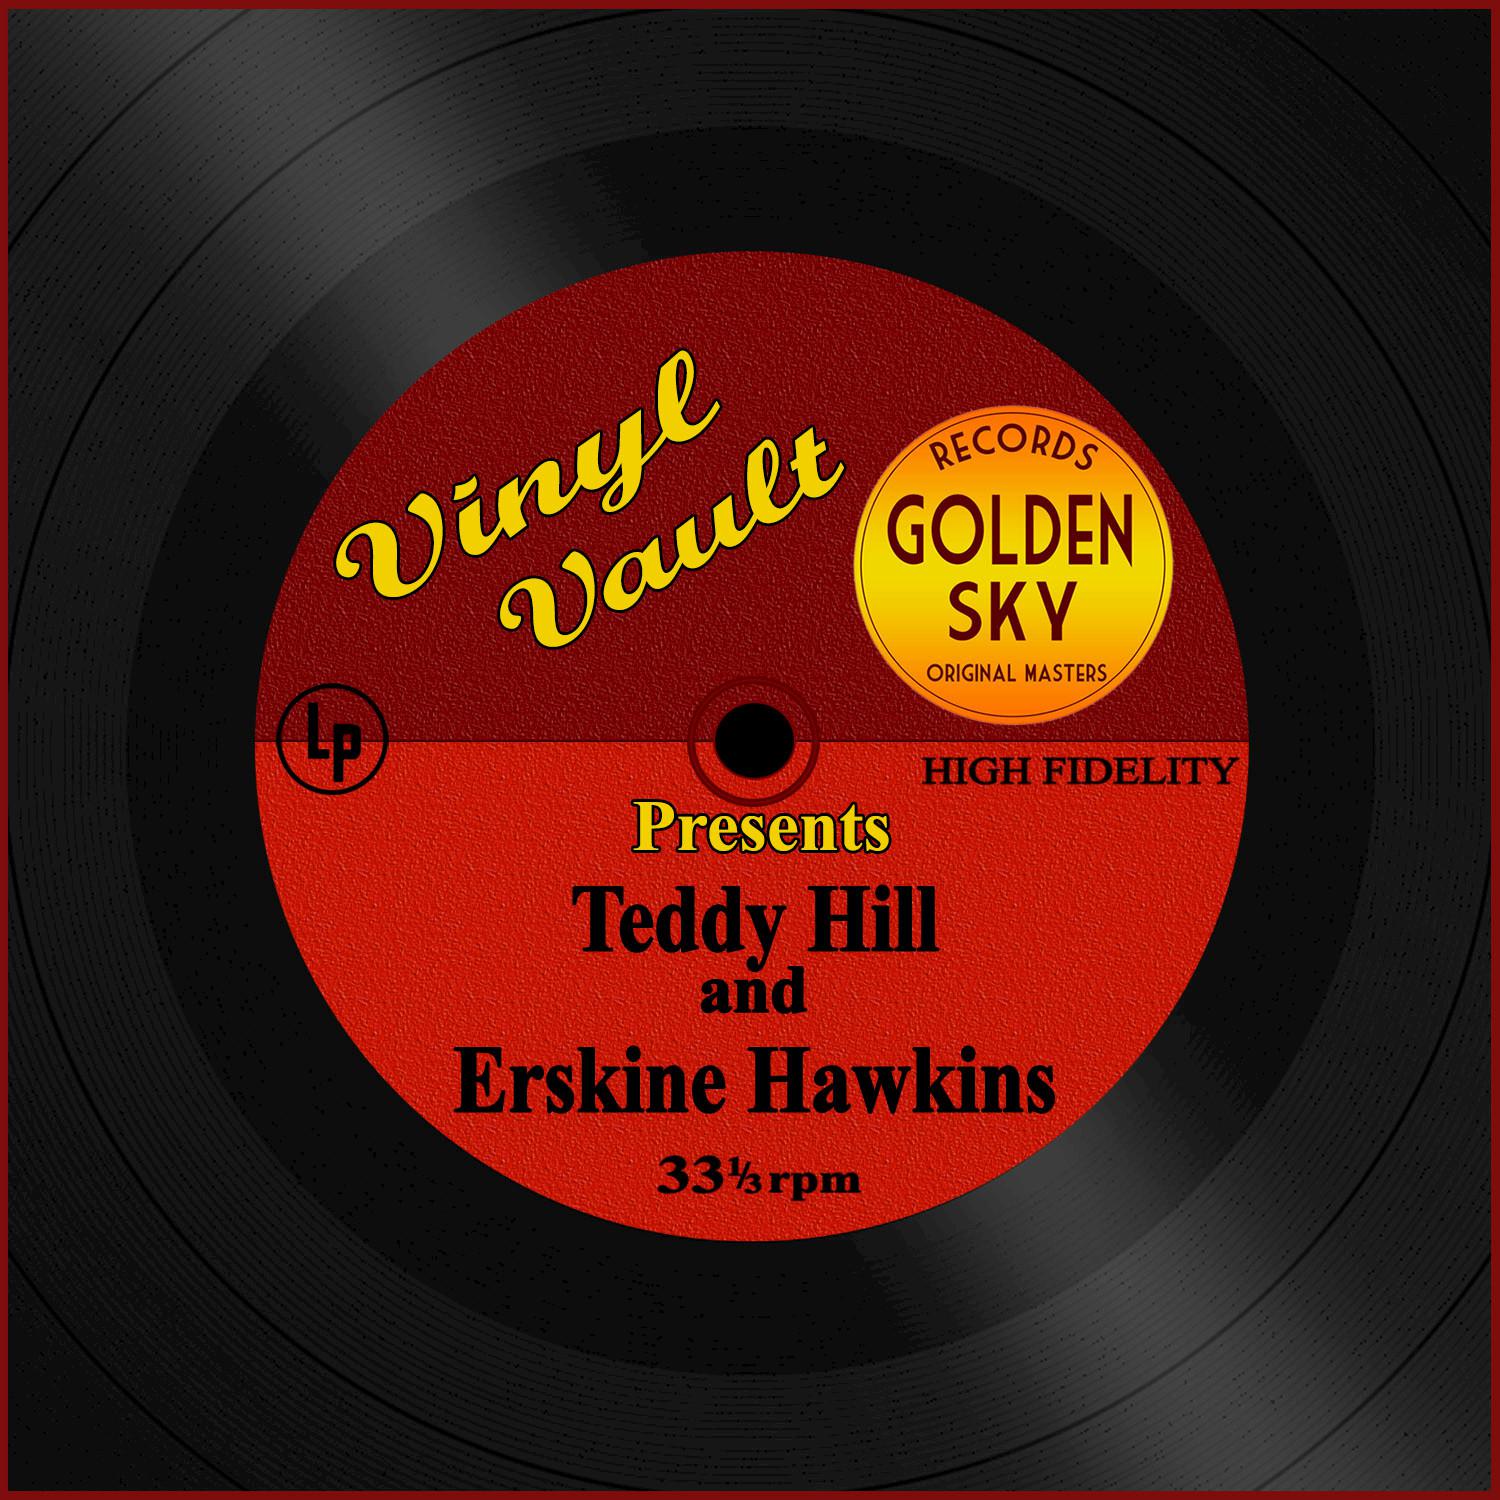 Vinyl Vault Presents Teddy Hill and Erskine Hawkins